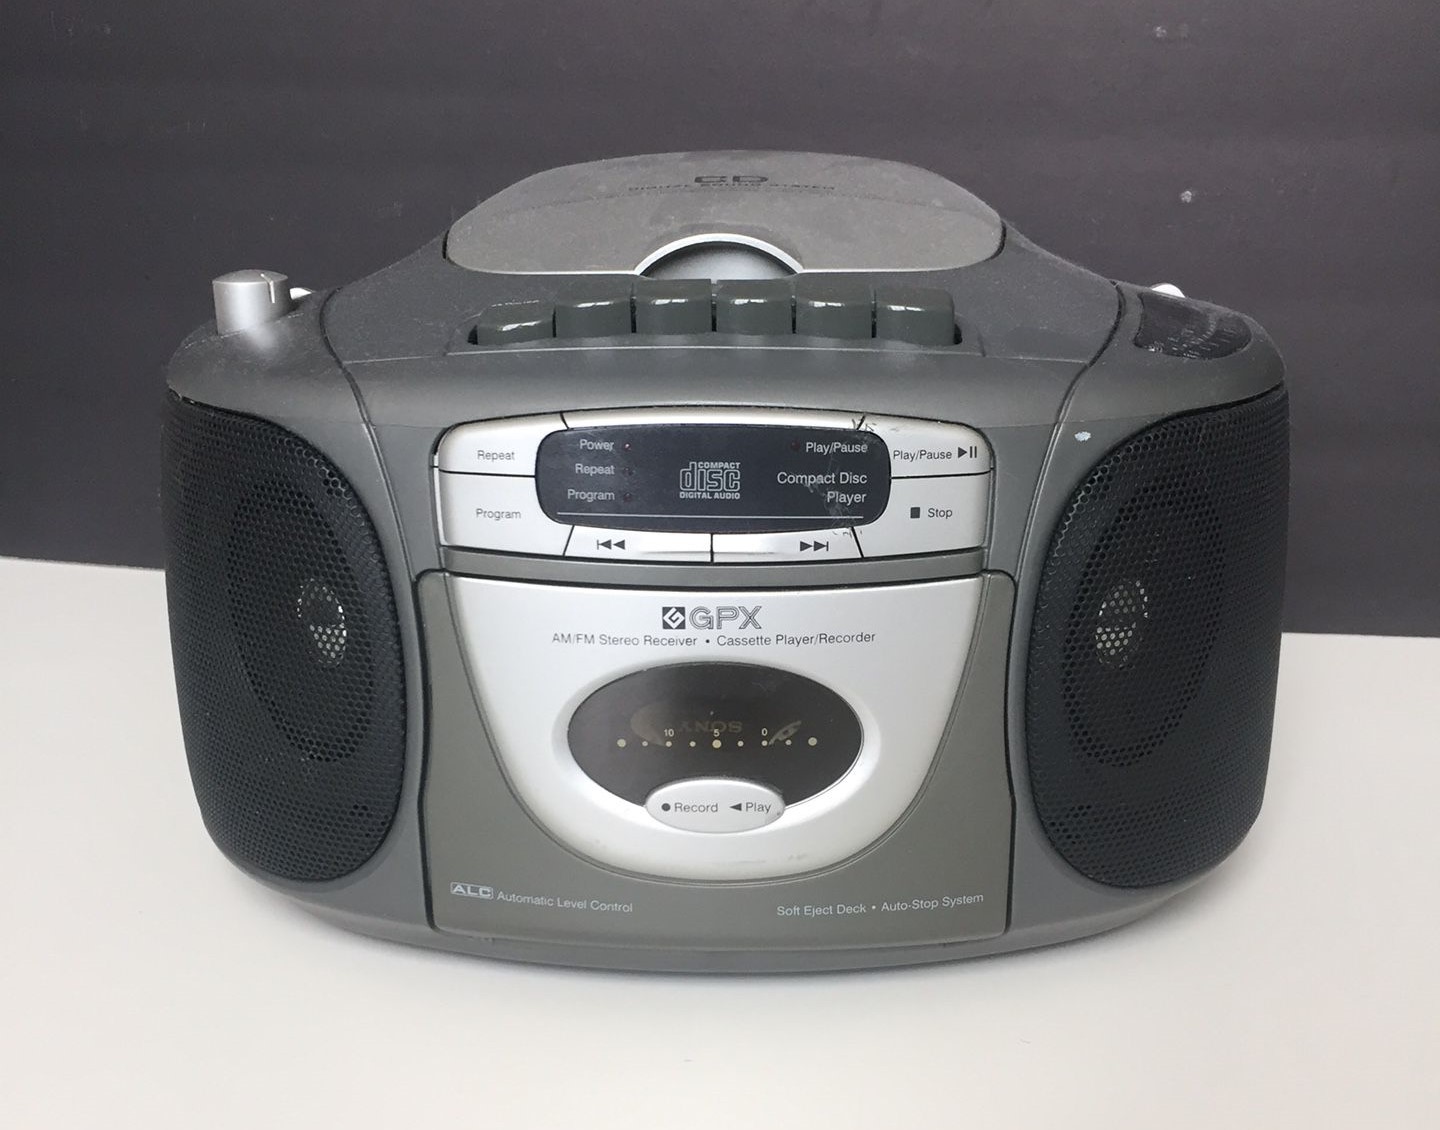 Jensen CD-R CD-RW Radio MP3 Boombox, Red, CD-490 